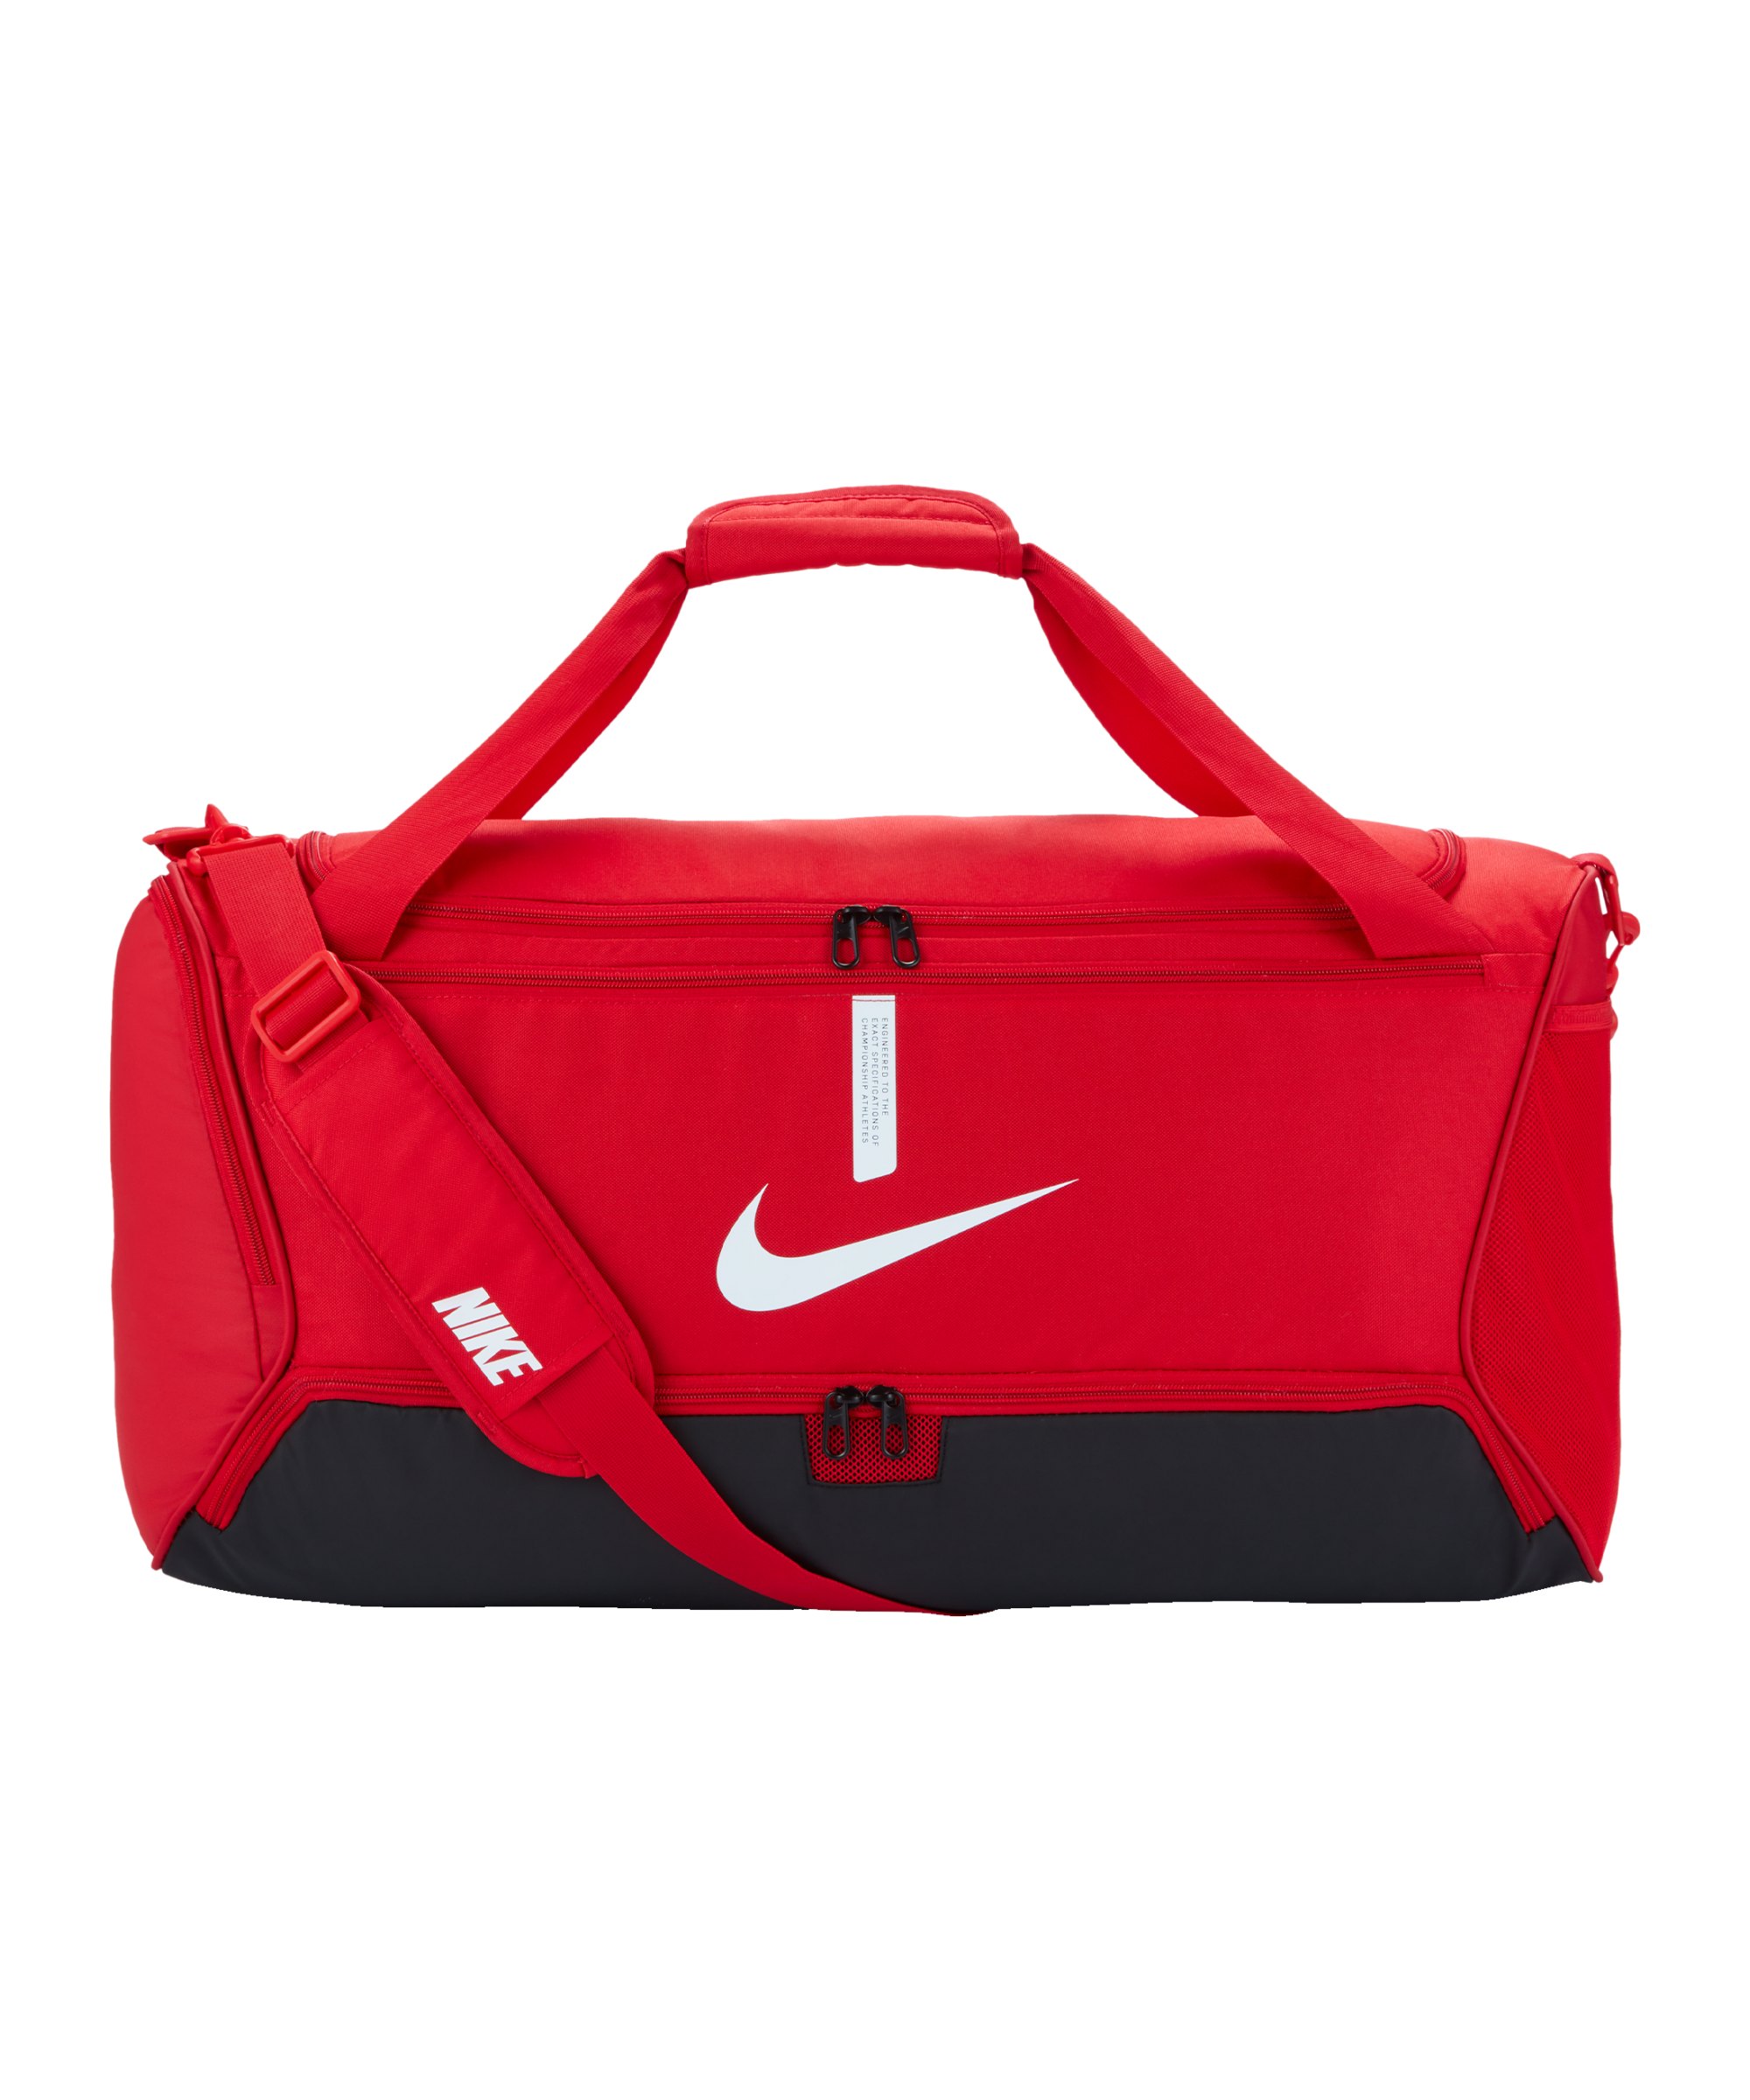 Nike Academy Team Duffel Tasche Medium Rot F657 - rot